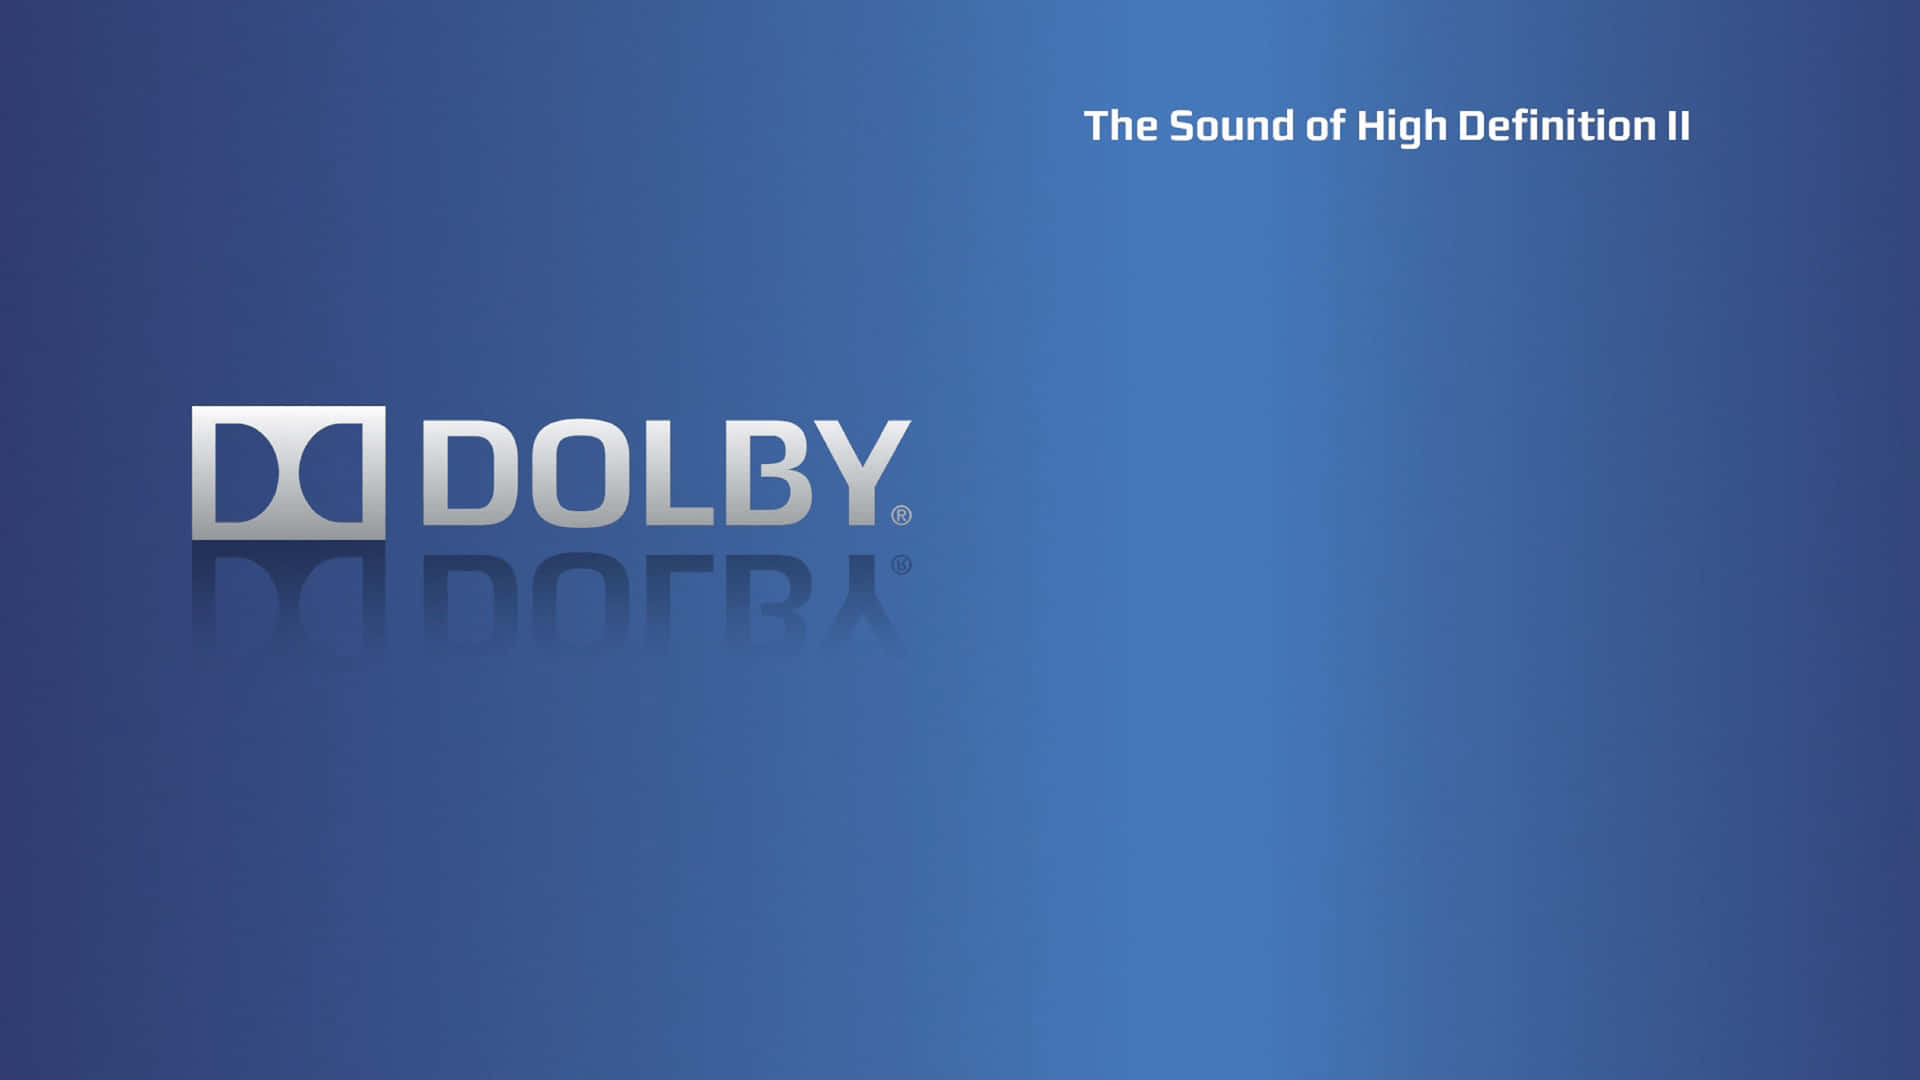 Impresionantepaisaje En 4k Con Dolby Vision. Fondo de pantalla